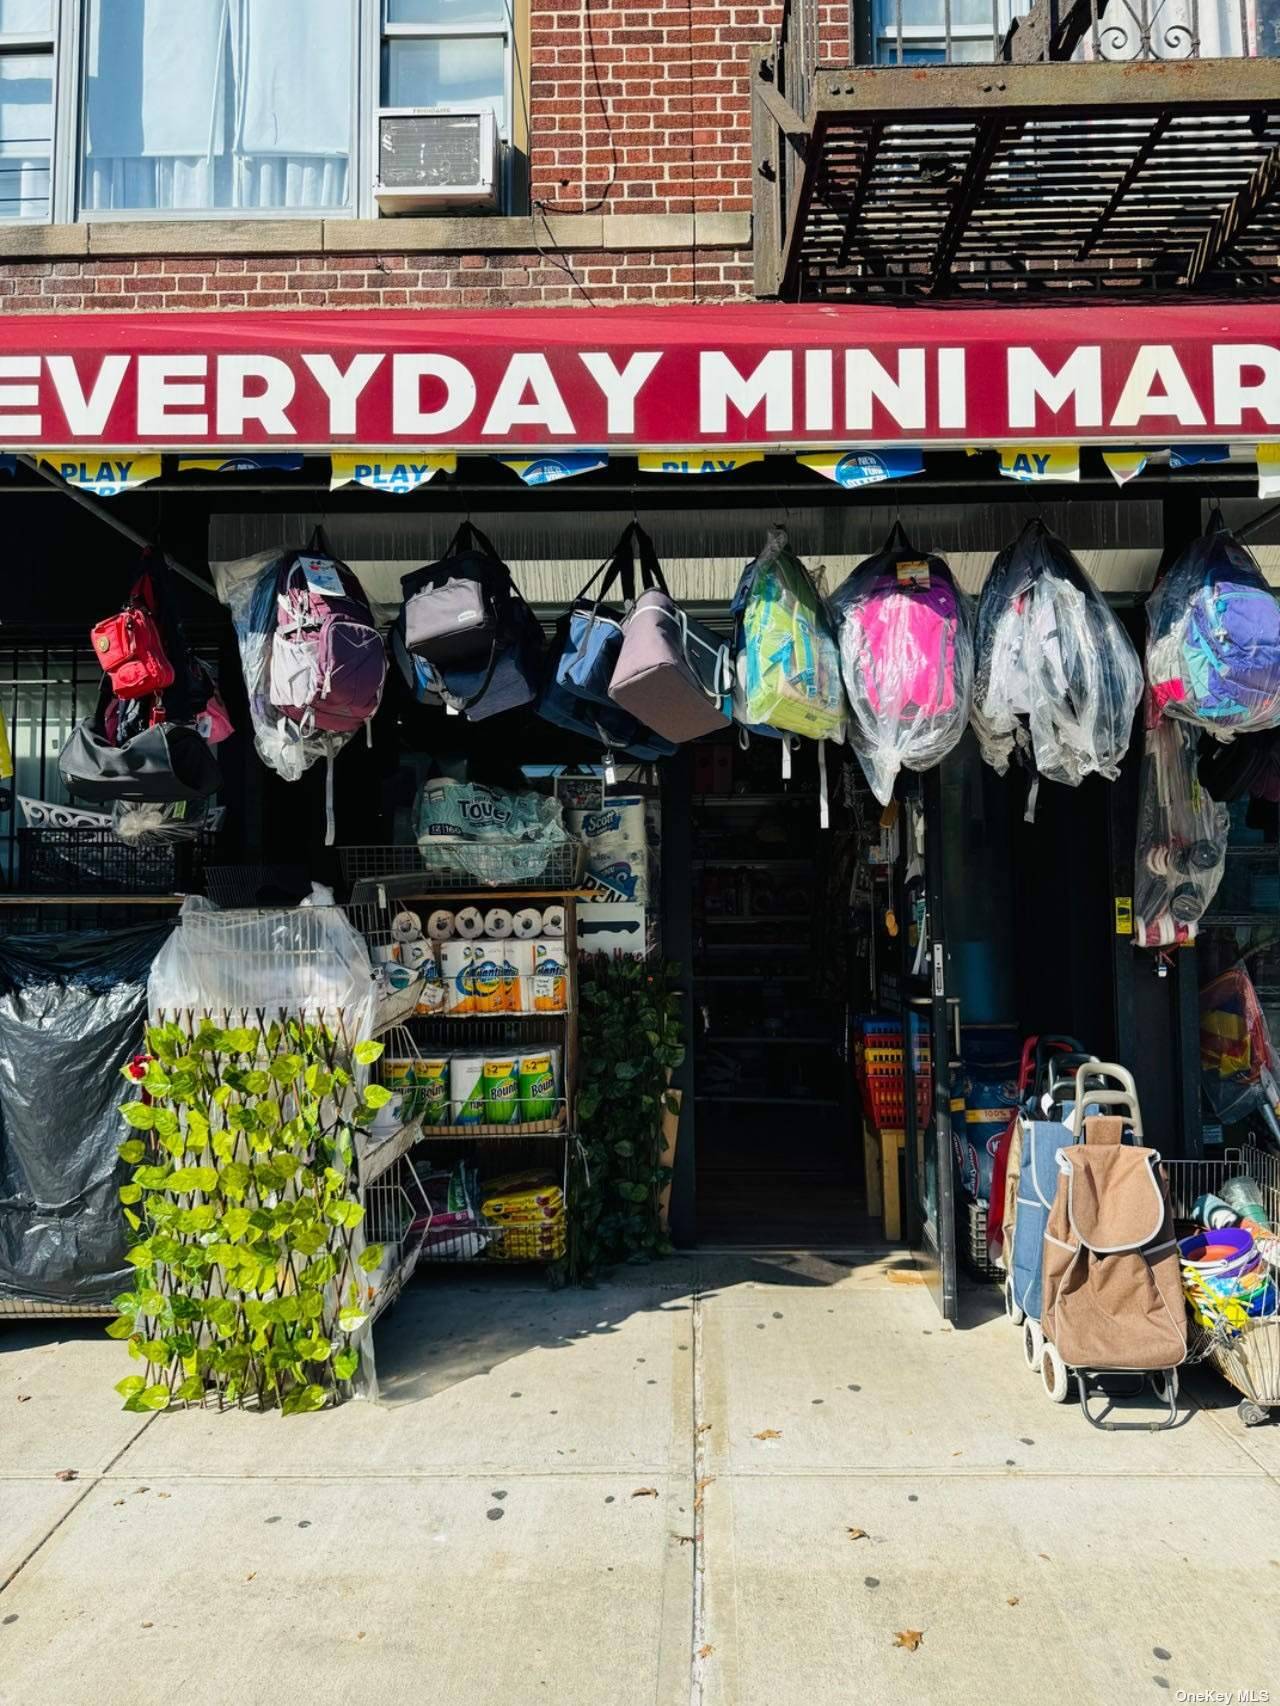 A well established mini market in Maspeth, NY.